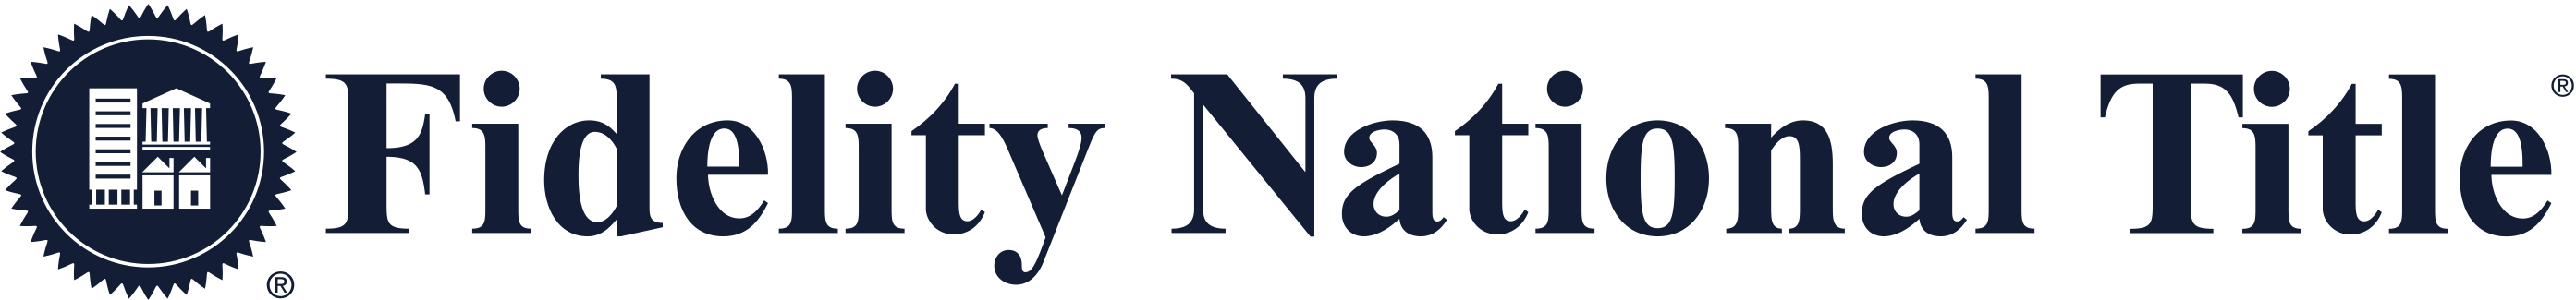 Fidelity National Title | Logo